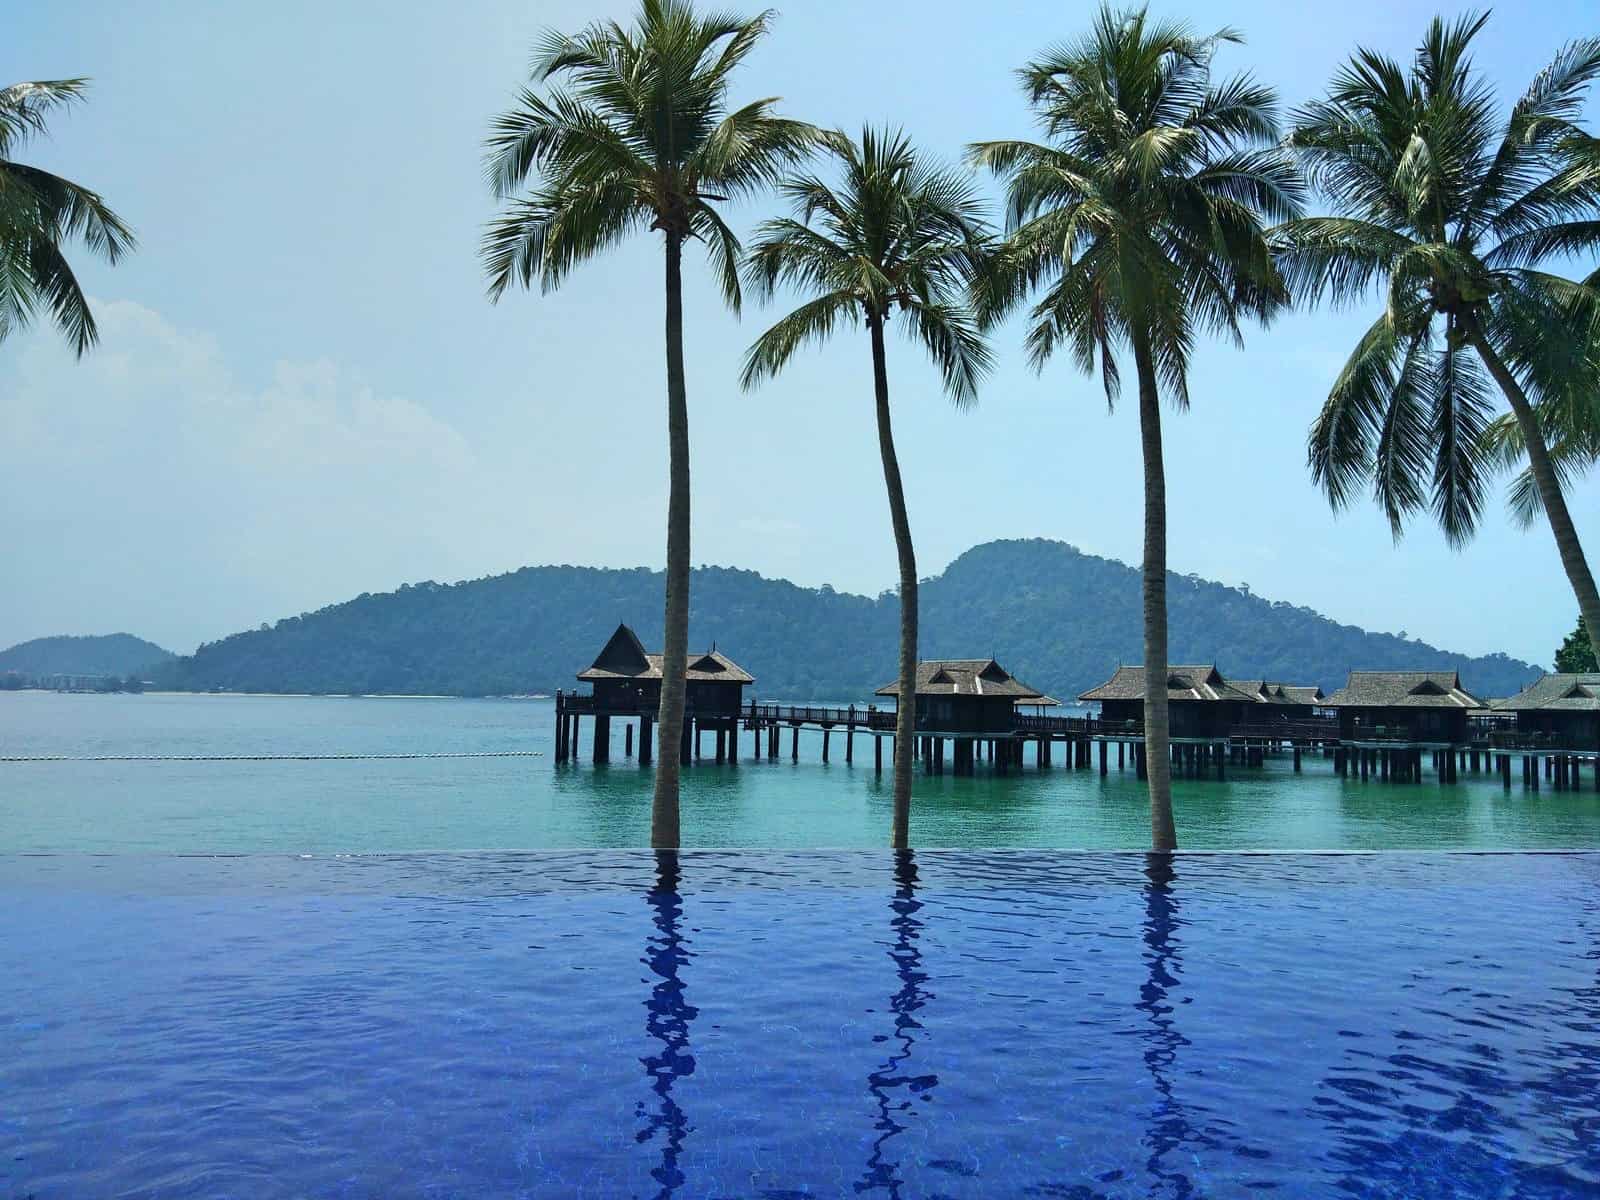 Pangkor-Laut-Resort-private-island-Malaysia-Travel-Mermaid